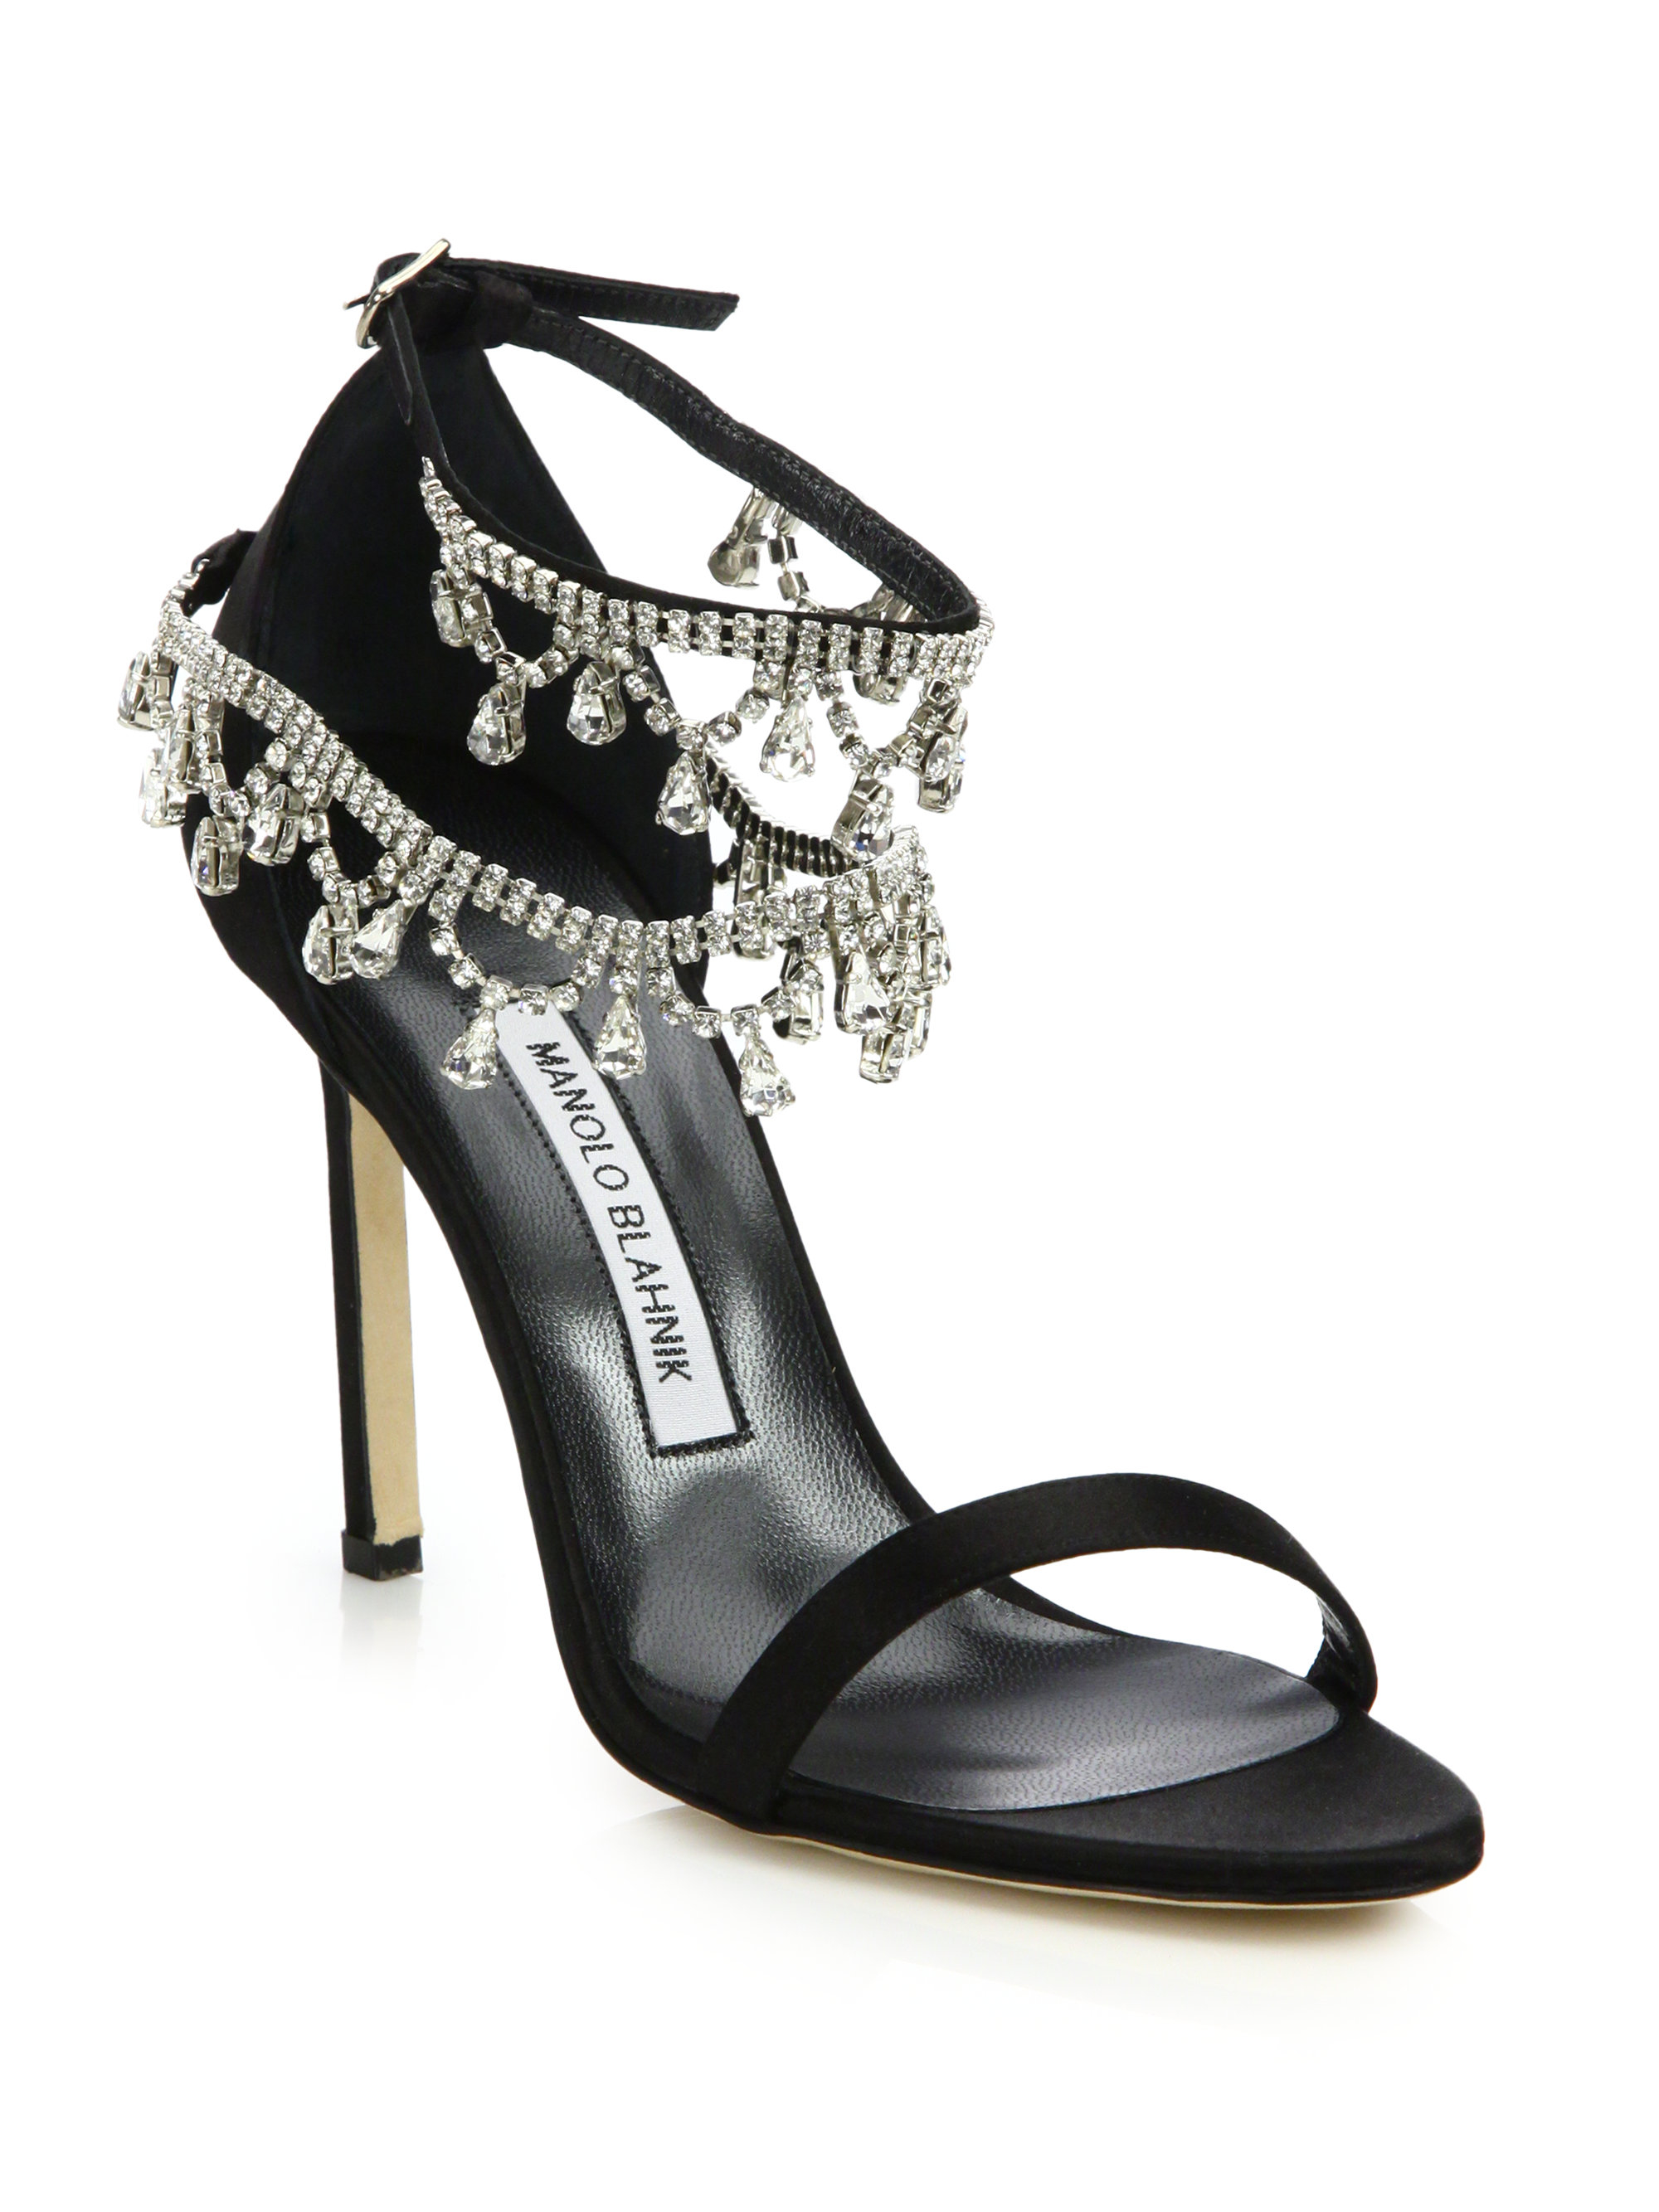 Lyst - Manolo Blahnik Hourista Draped Crystal & Satin Sandals in Black